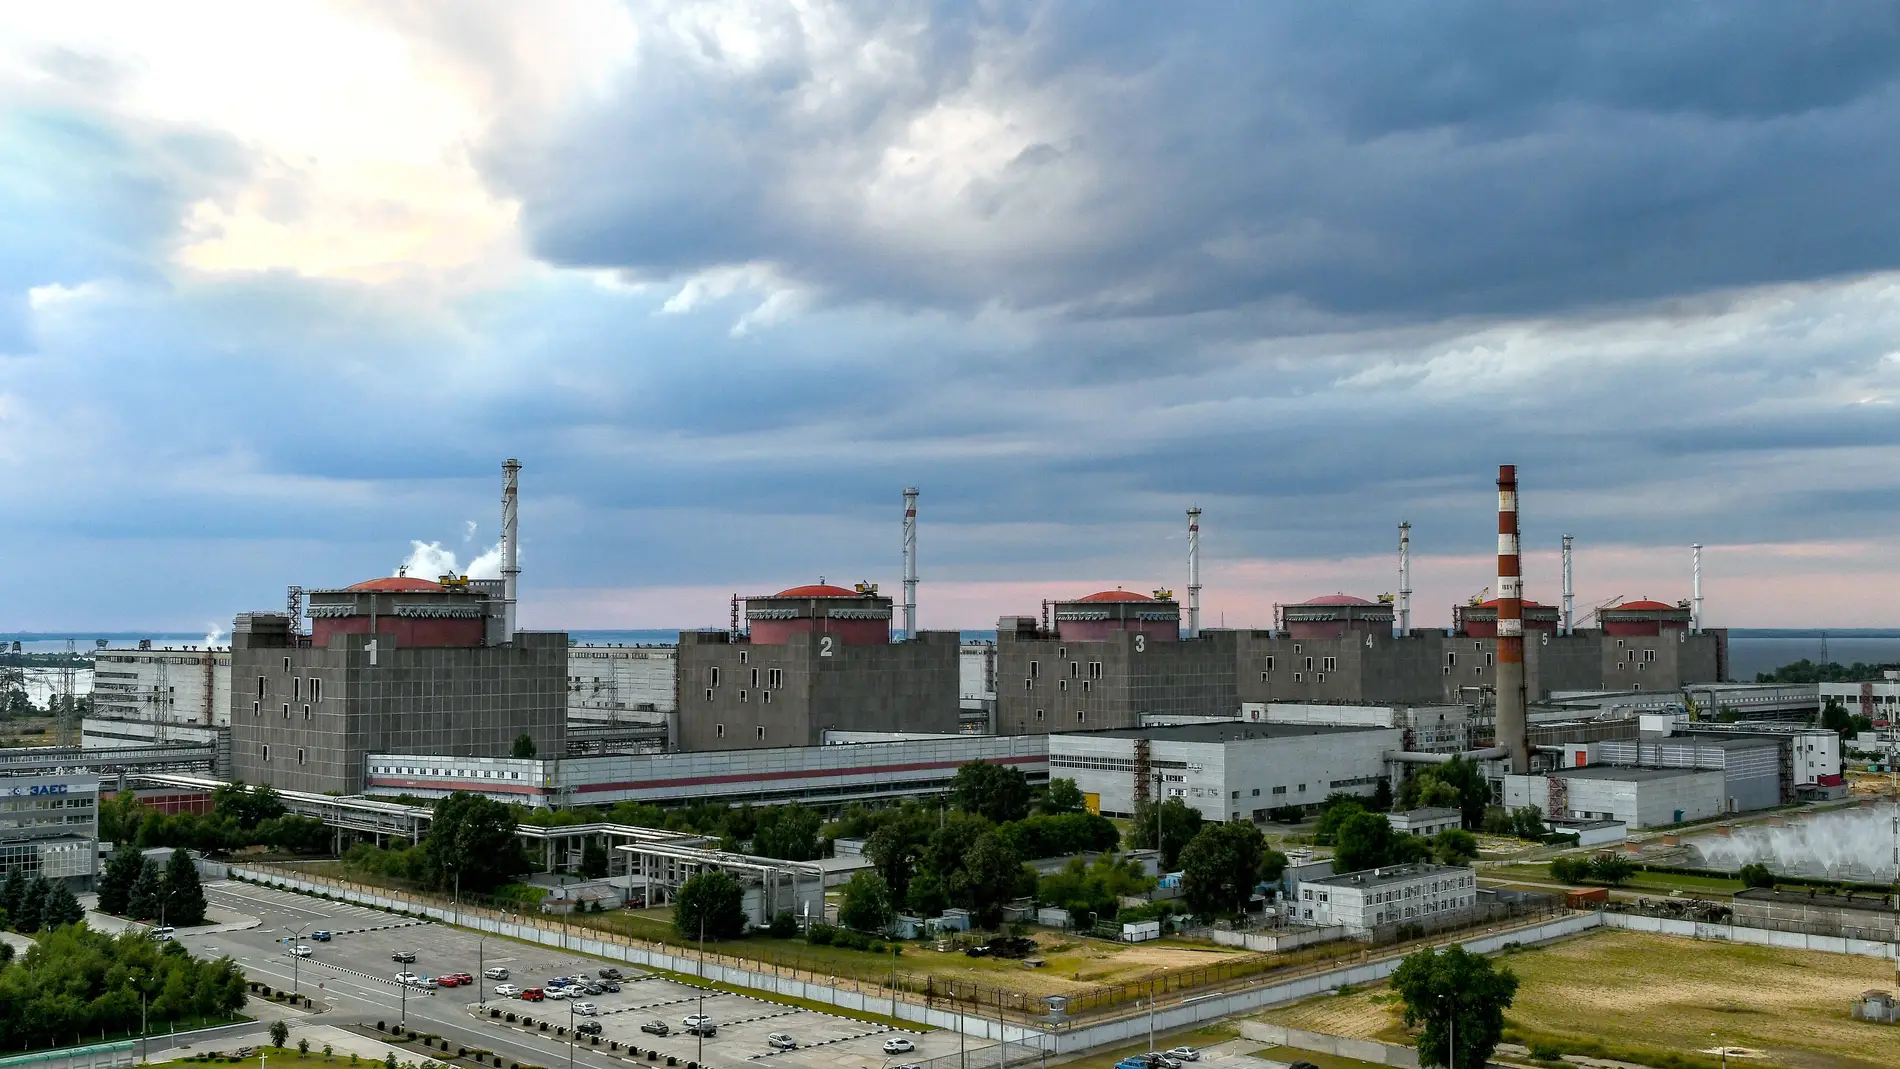 July 9, 2019, Enerhodar, Zaporizhzhia Region, Ukraine: Six VVER-1000 pressurized light water nuclear reactors, each generating 950 MWe, make the Zaporizhia Nuclear Power Plant the largest NPP in Europe and among the top 10 largest in the world, Enerhodar, Zaporizhzhia Region, southeastern Ukraine, July 9, 2019. Ukrinform. (Foto de ARCHIVO) 09/07/2019